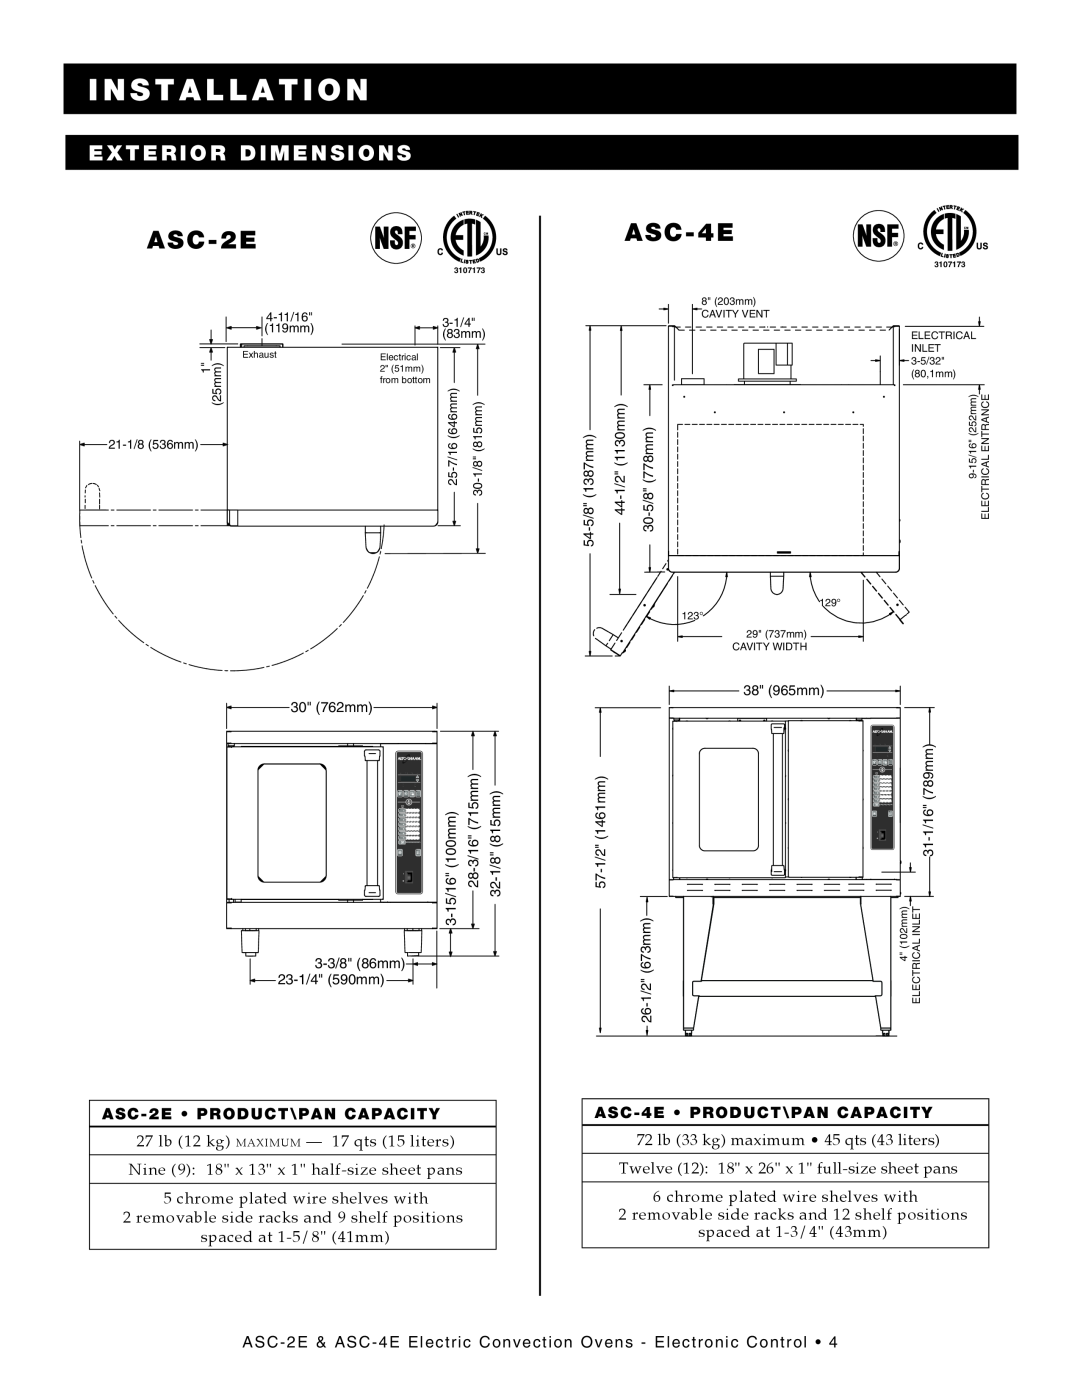 Alto-Shaam ASC-4E Exterior Dimensions, I N S T A L L A T I O N, ASC-2E PRODUCT\PAN CAPACITY, 4-11/16, 3-1/4, 119mm 